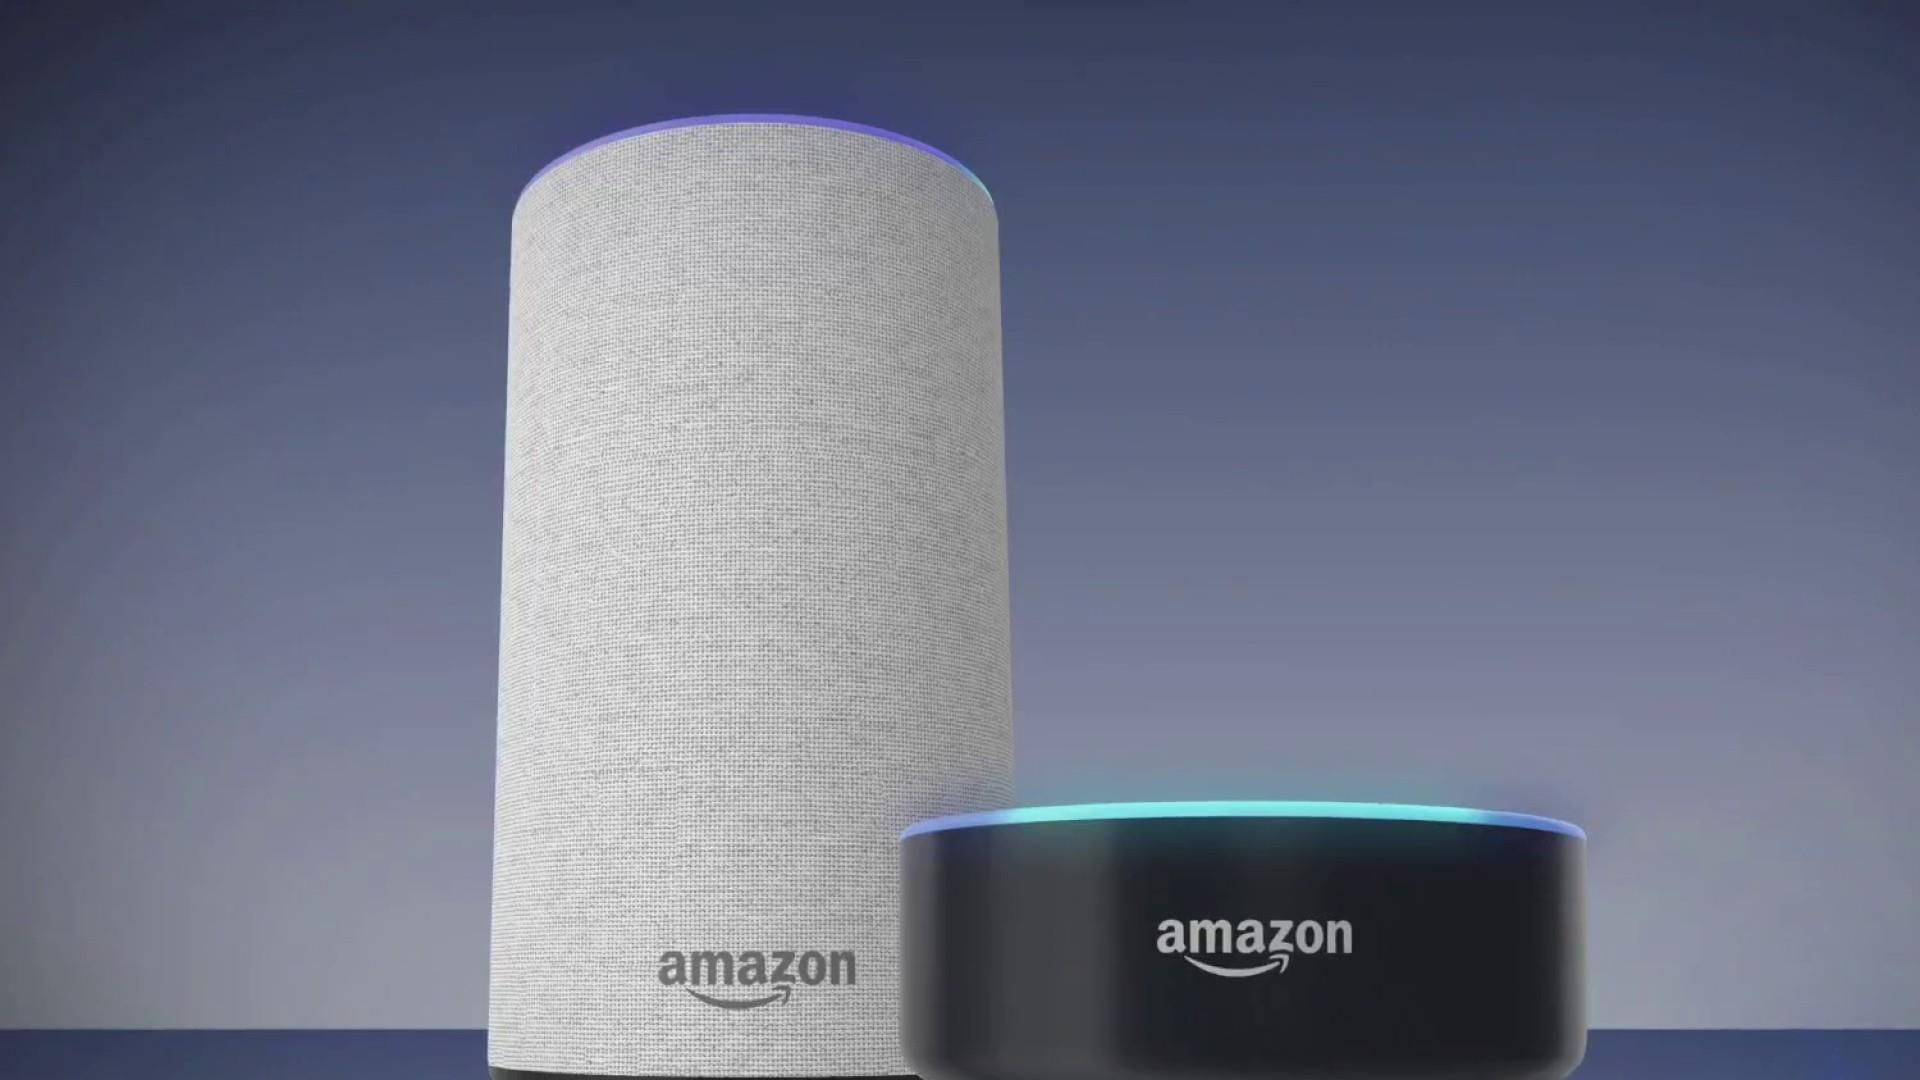 Thousands of Amazon employees listen to Alexa voice recordings